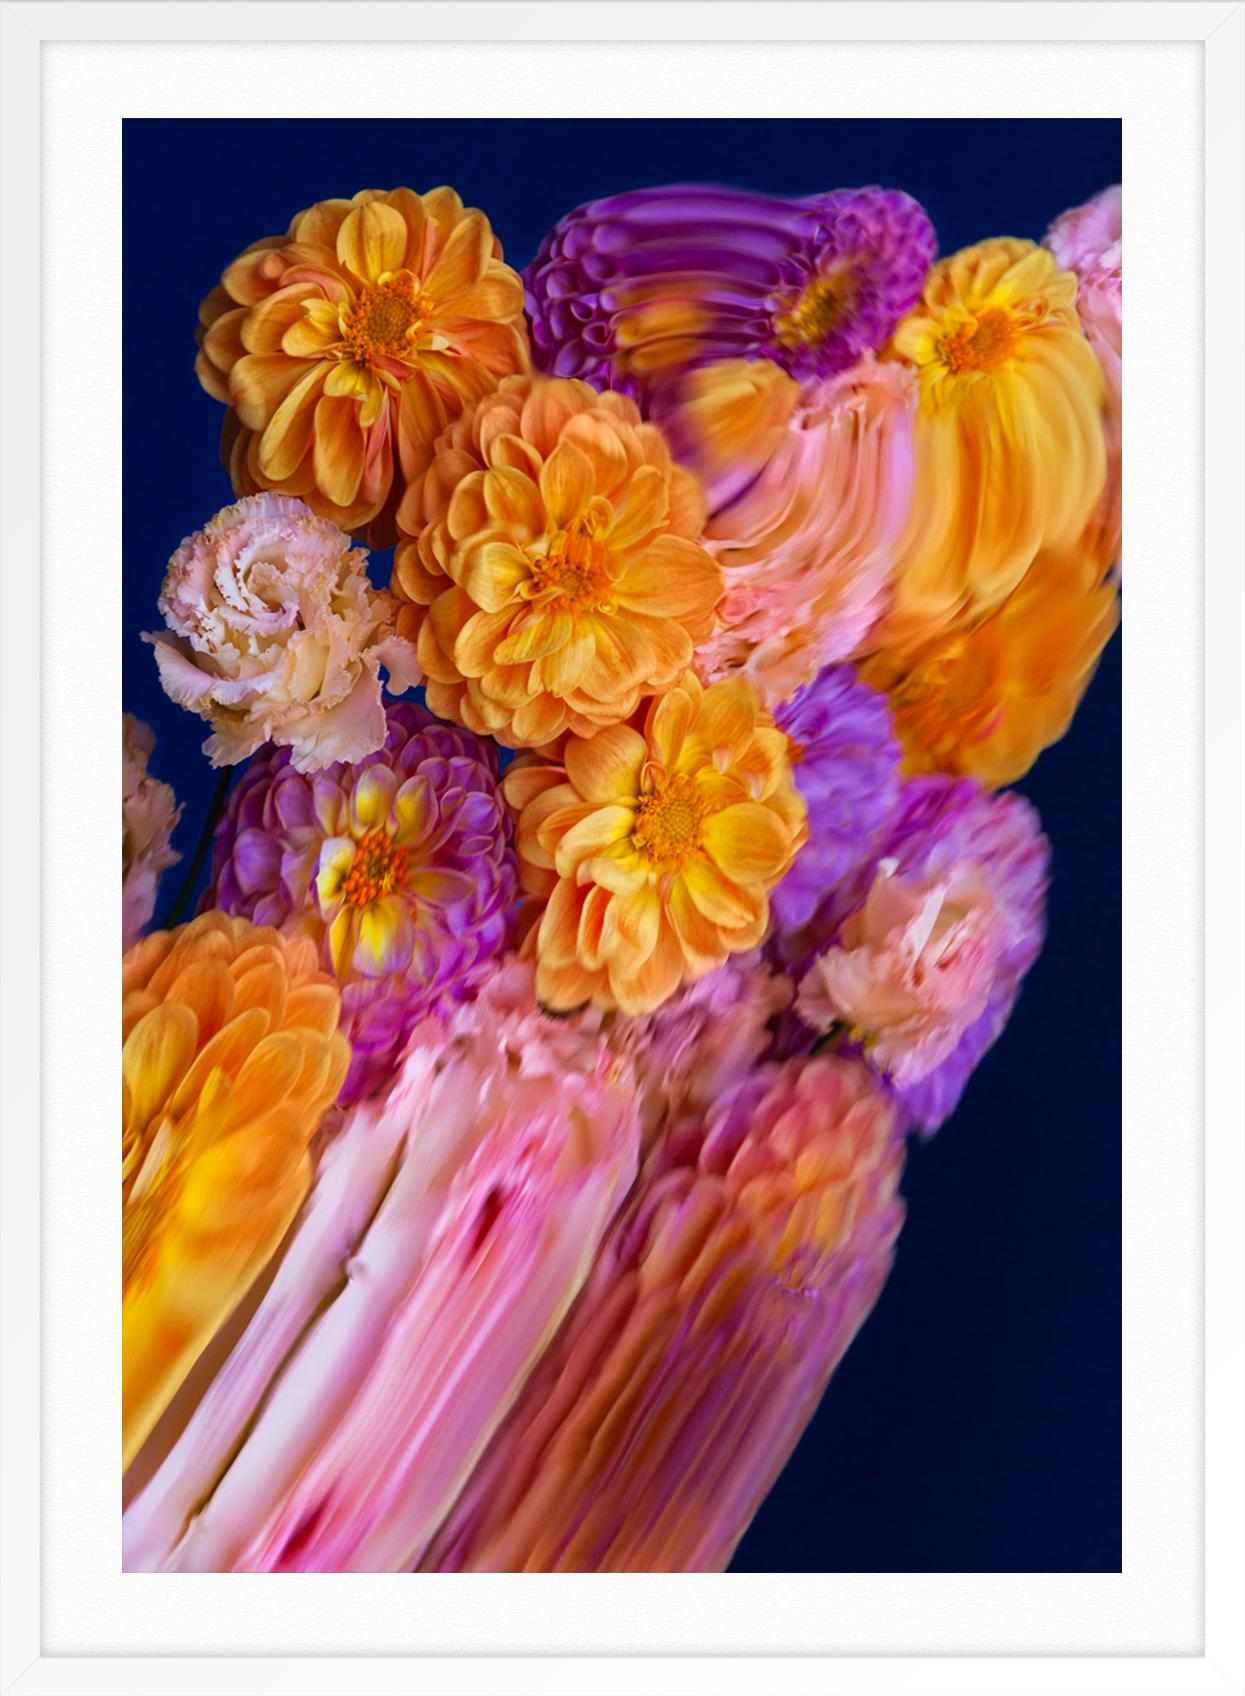 Dusk 1 - Orange Abstract Photograph by Jordan Tiberio